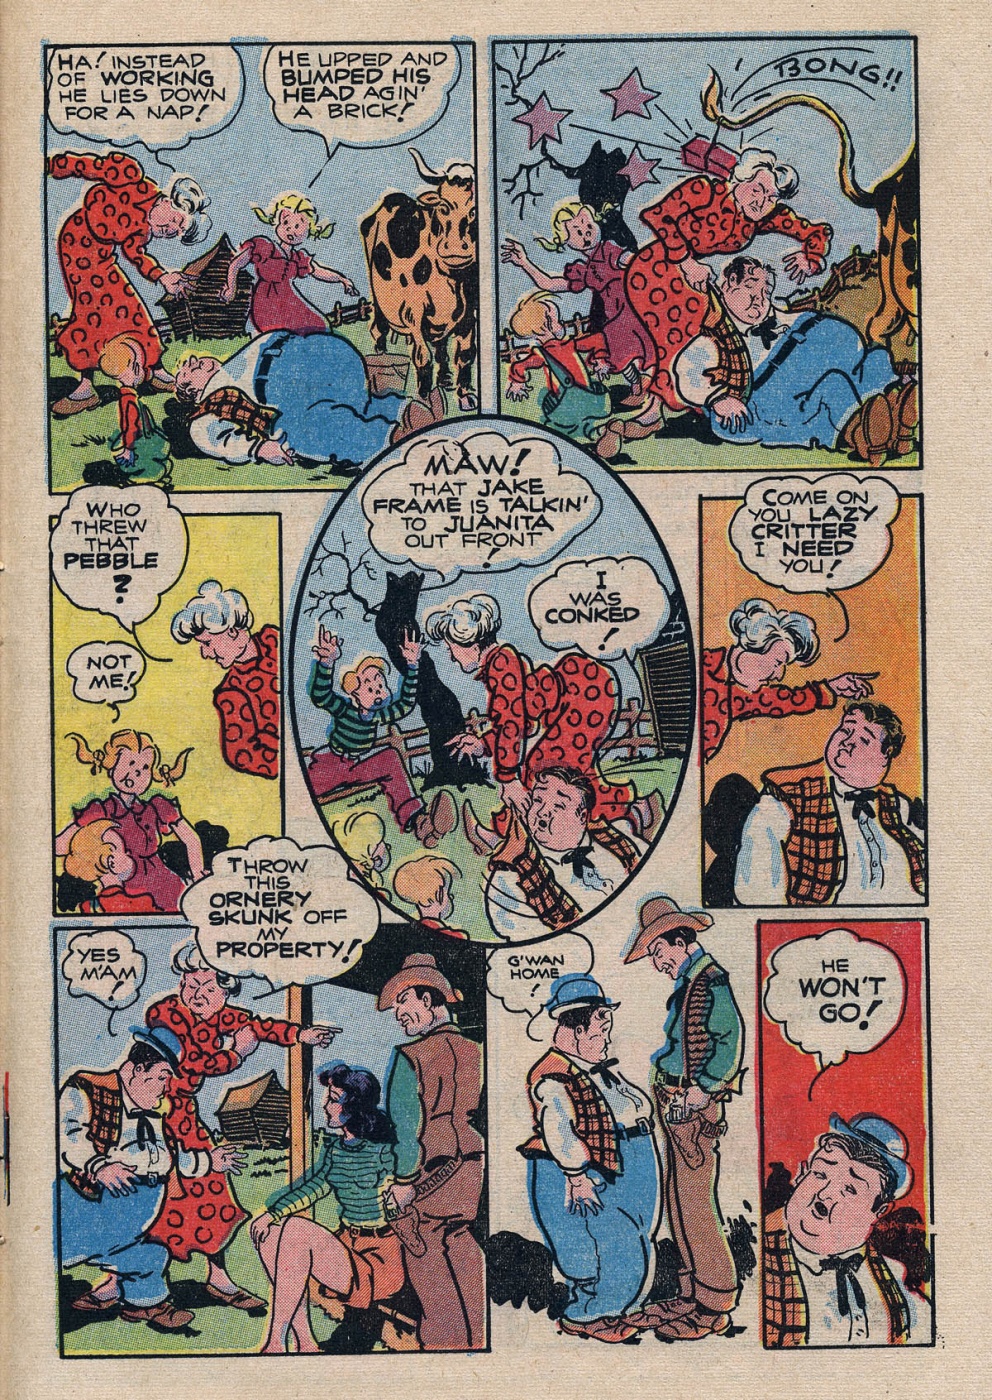 Funny Comic Strips - Abbott and Costello 001 (Feb 1948) 25